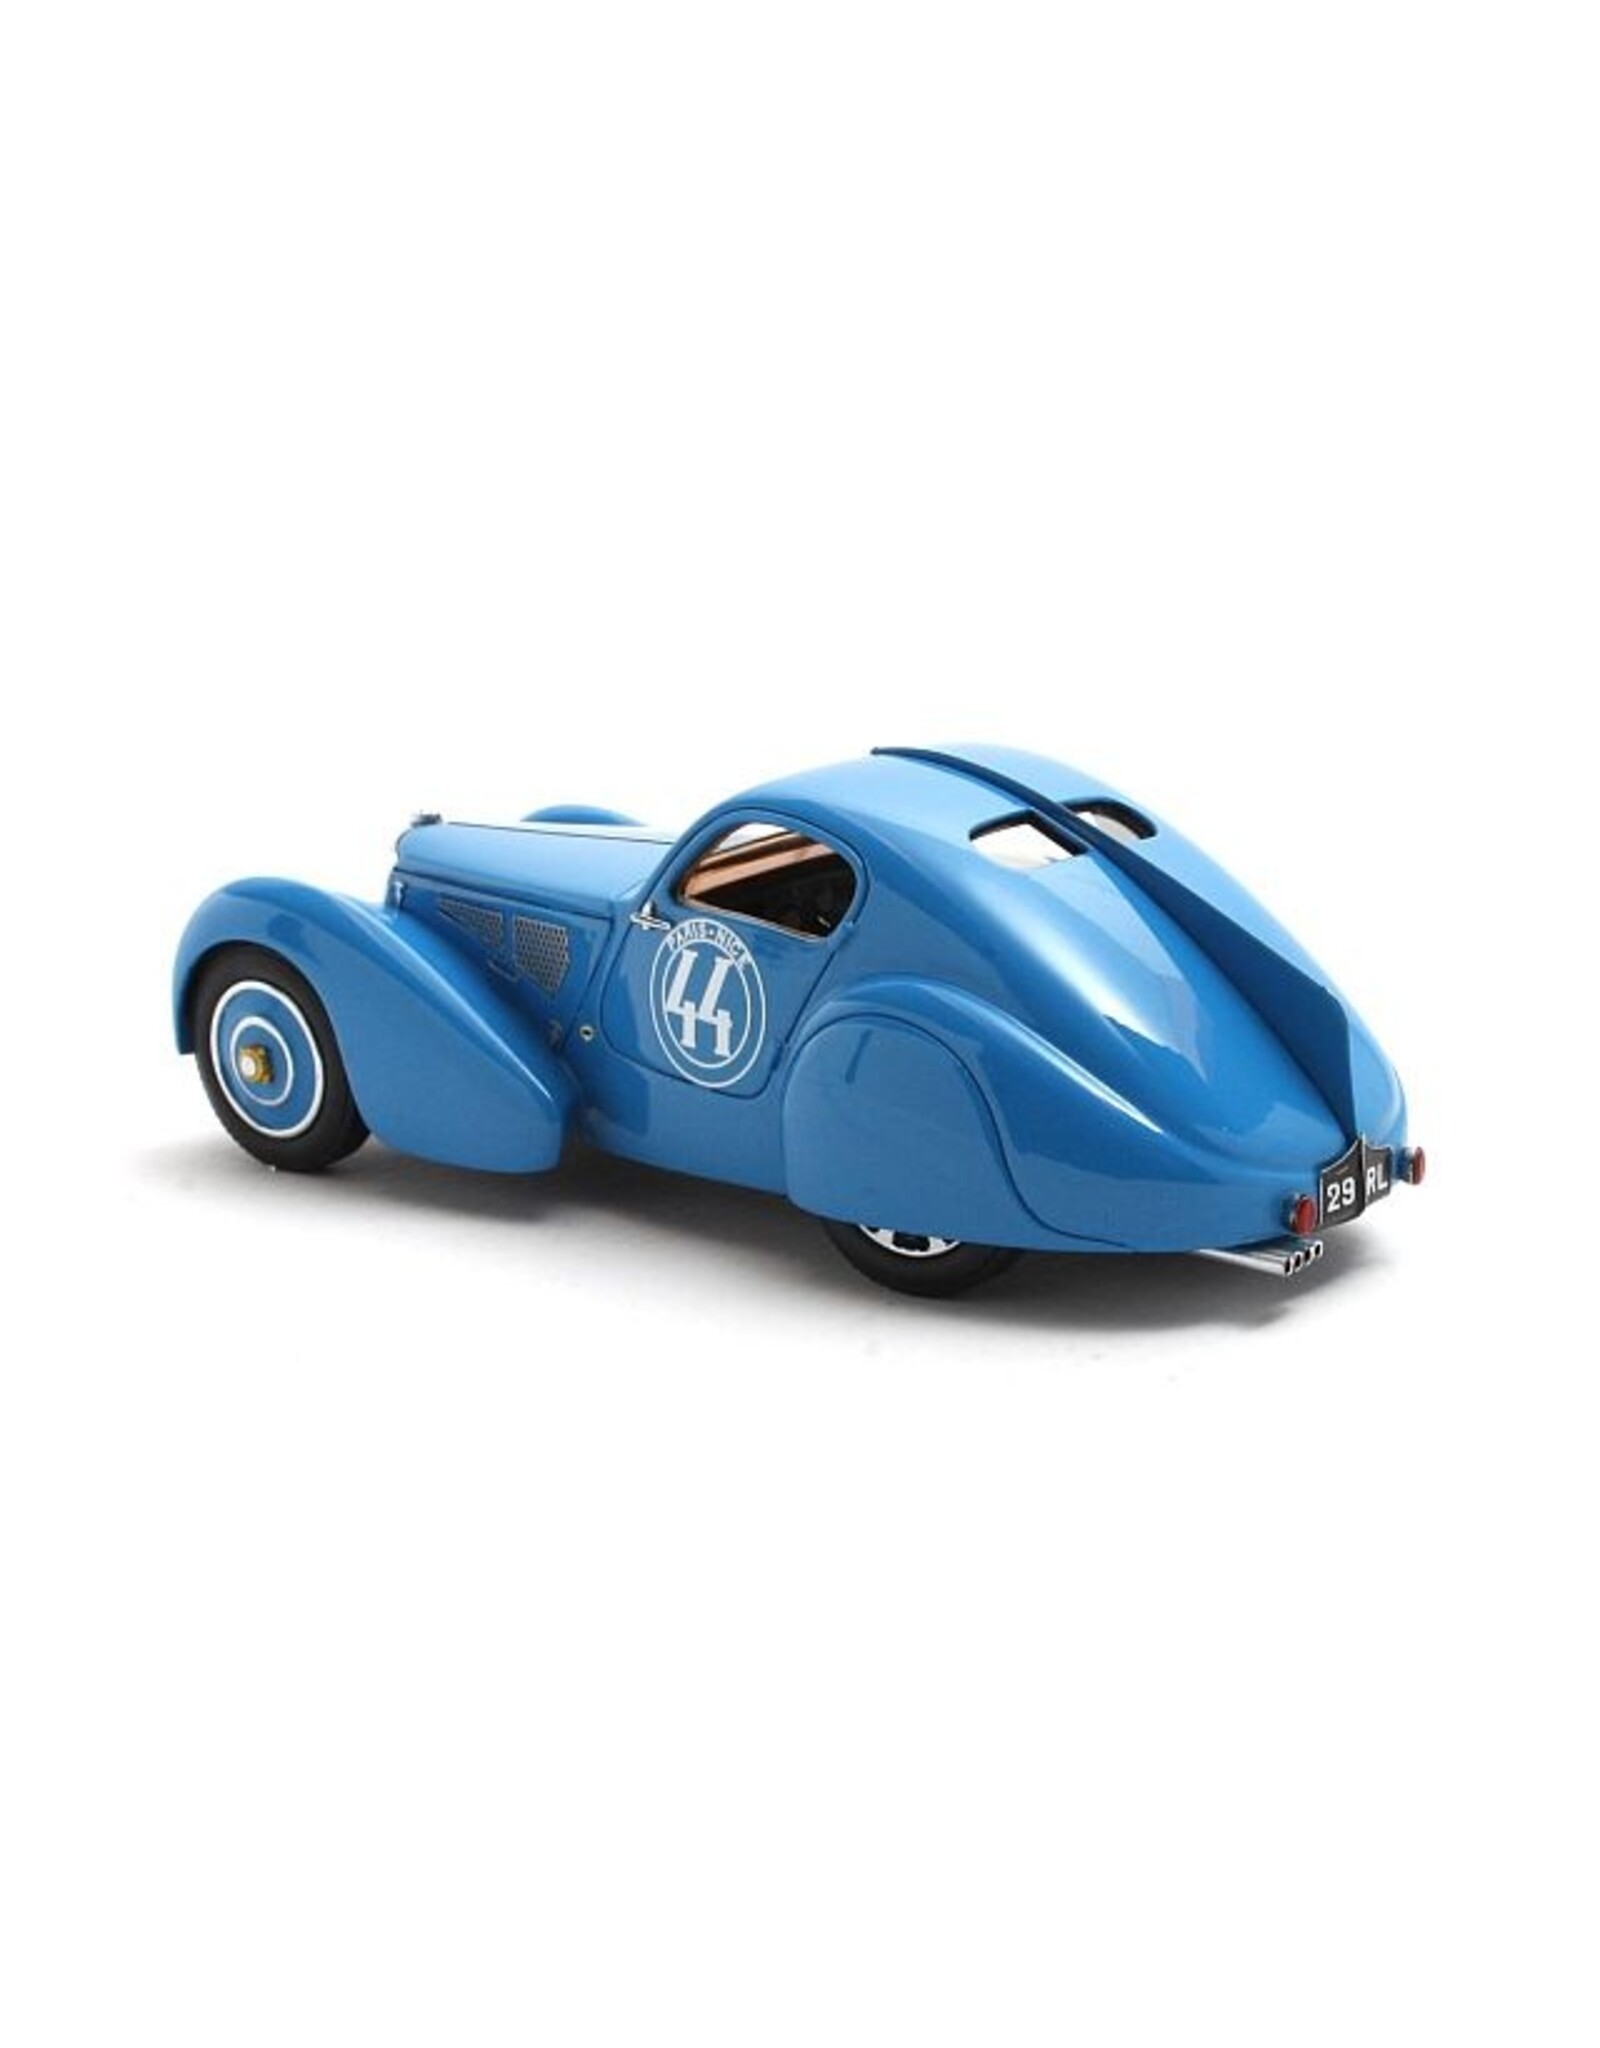 Bugatti Bugatti T51 Dubois coupe(1935)Paris-Nice #44(blue)